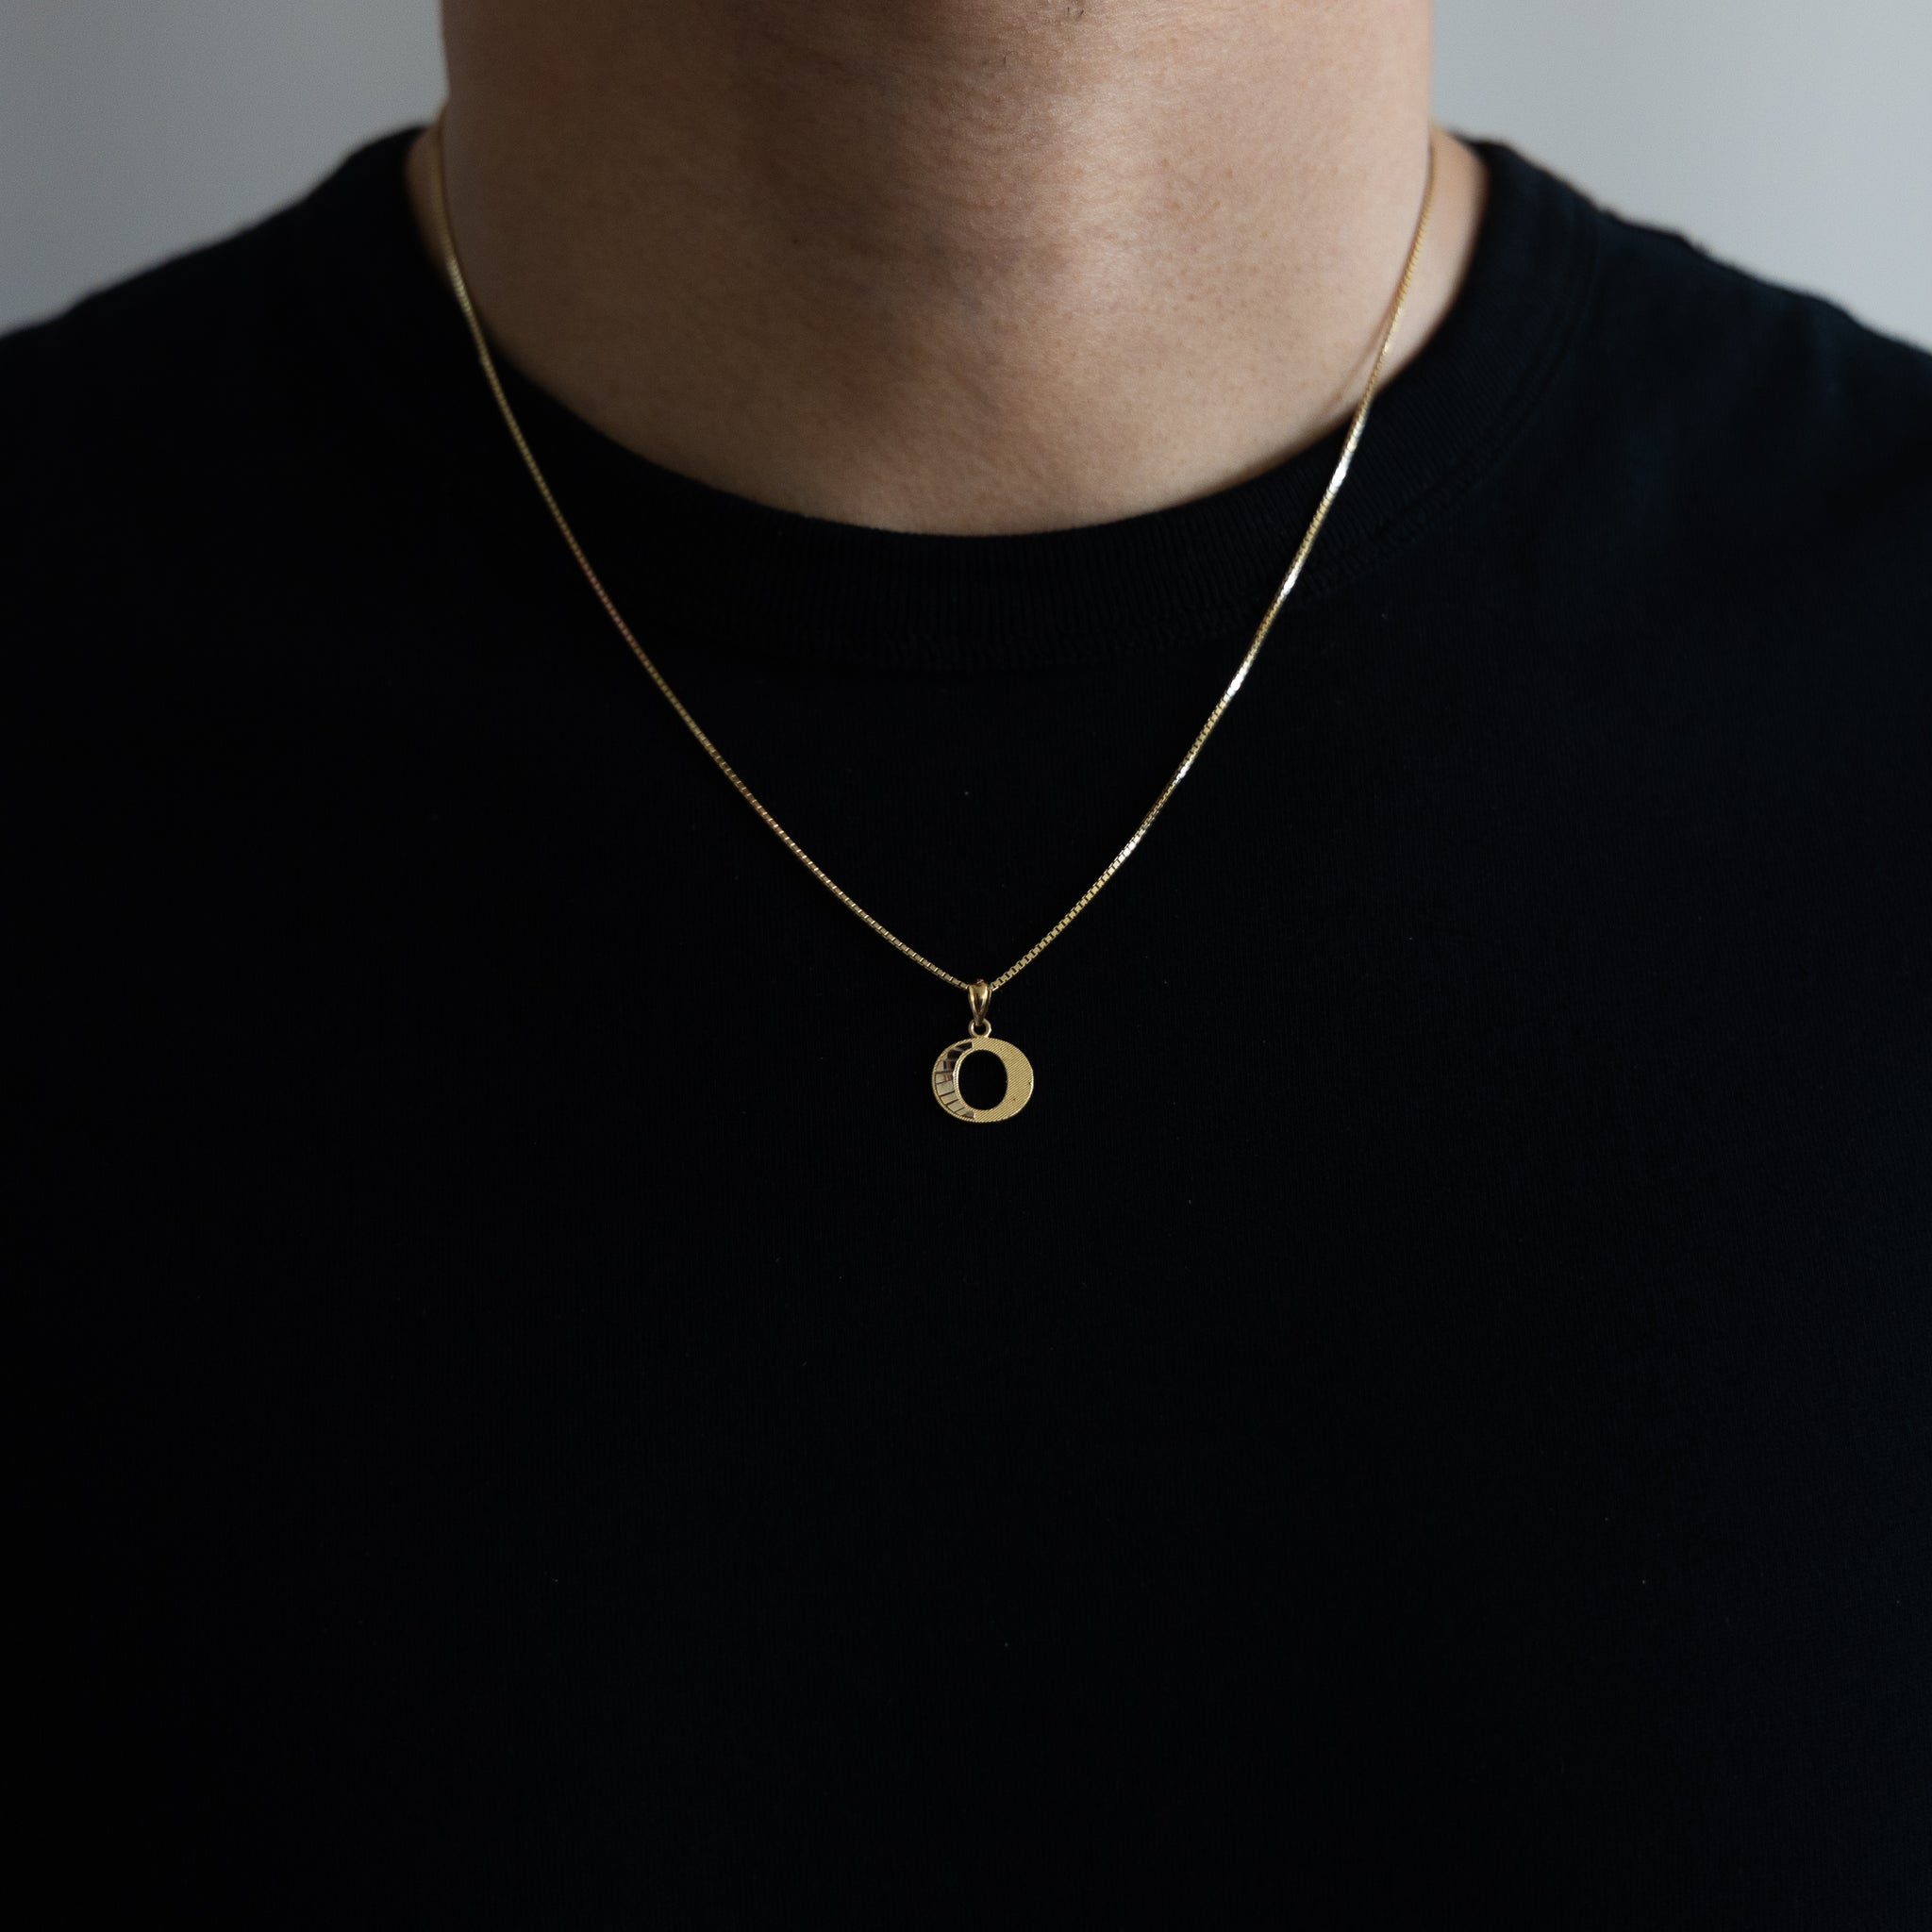 Gold Bold Letter O Pendant | A-Z Pendants - Charlie & Co. Jewelry